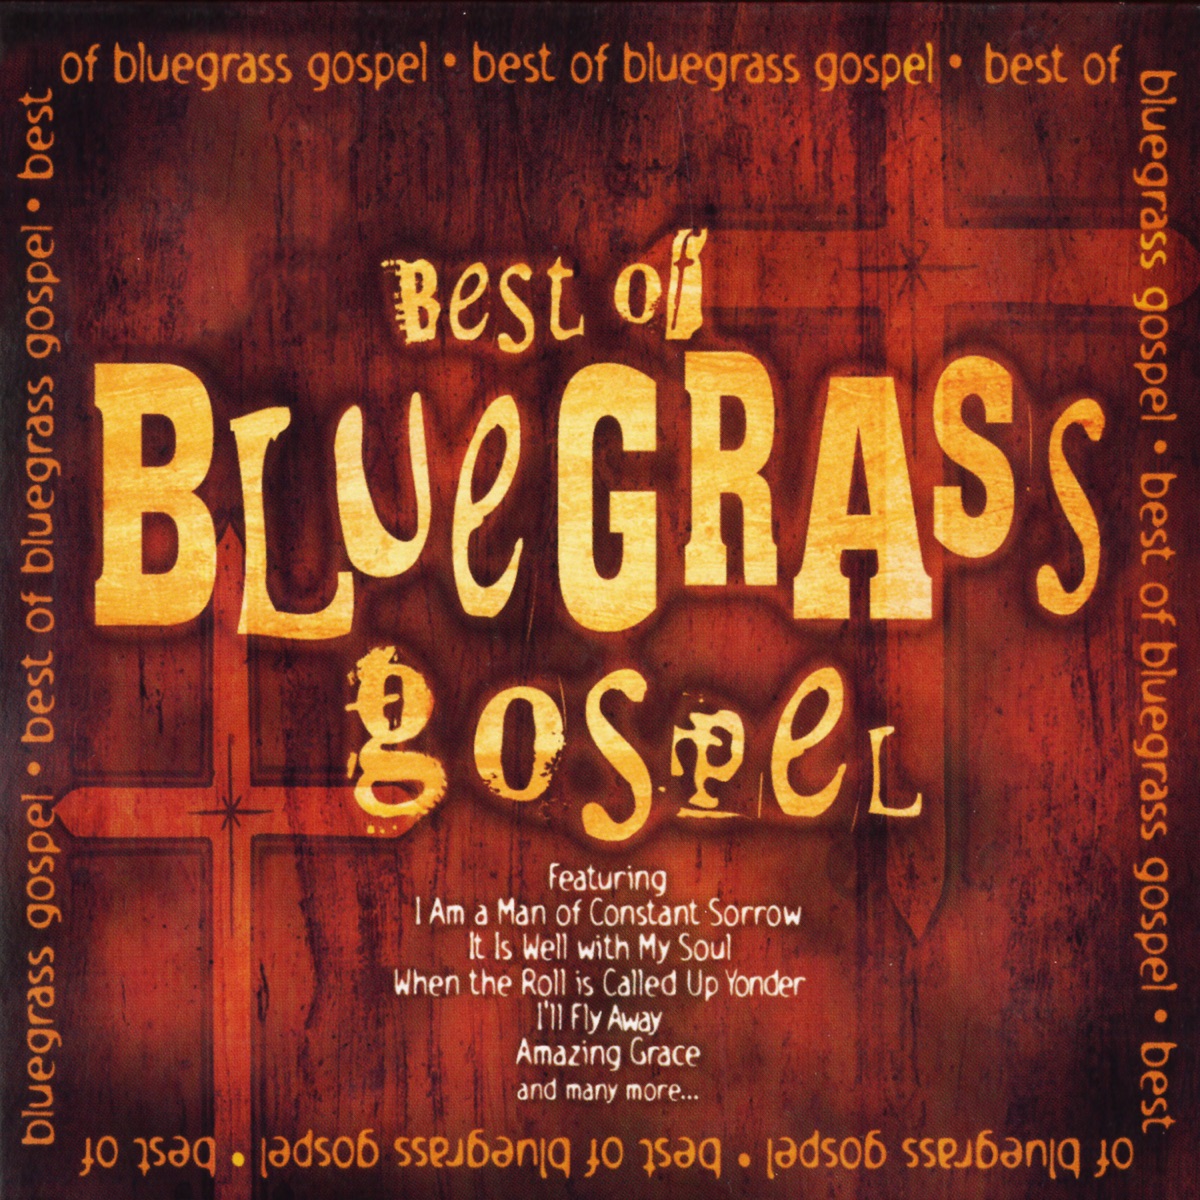 Best of Bluegrass Gospel by The Bluegrass Gospel Group, Jesse Lee